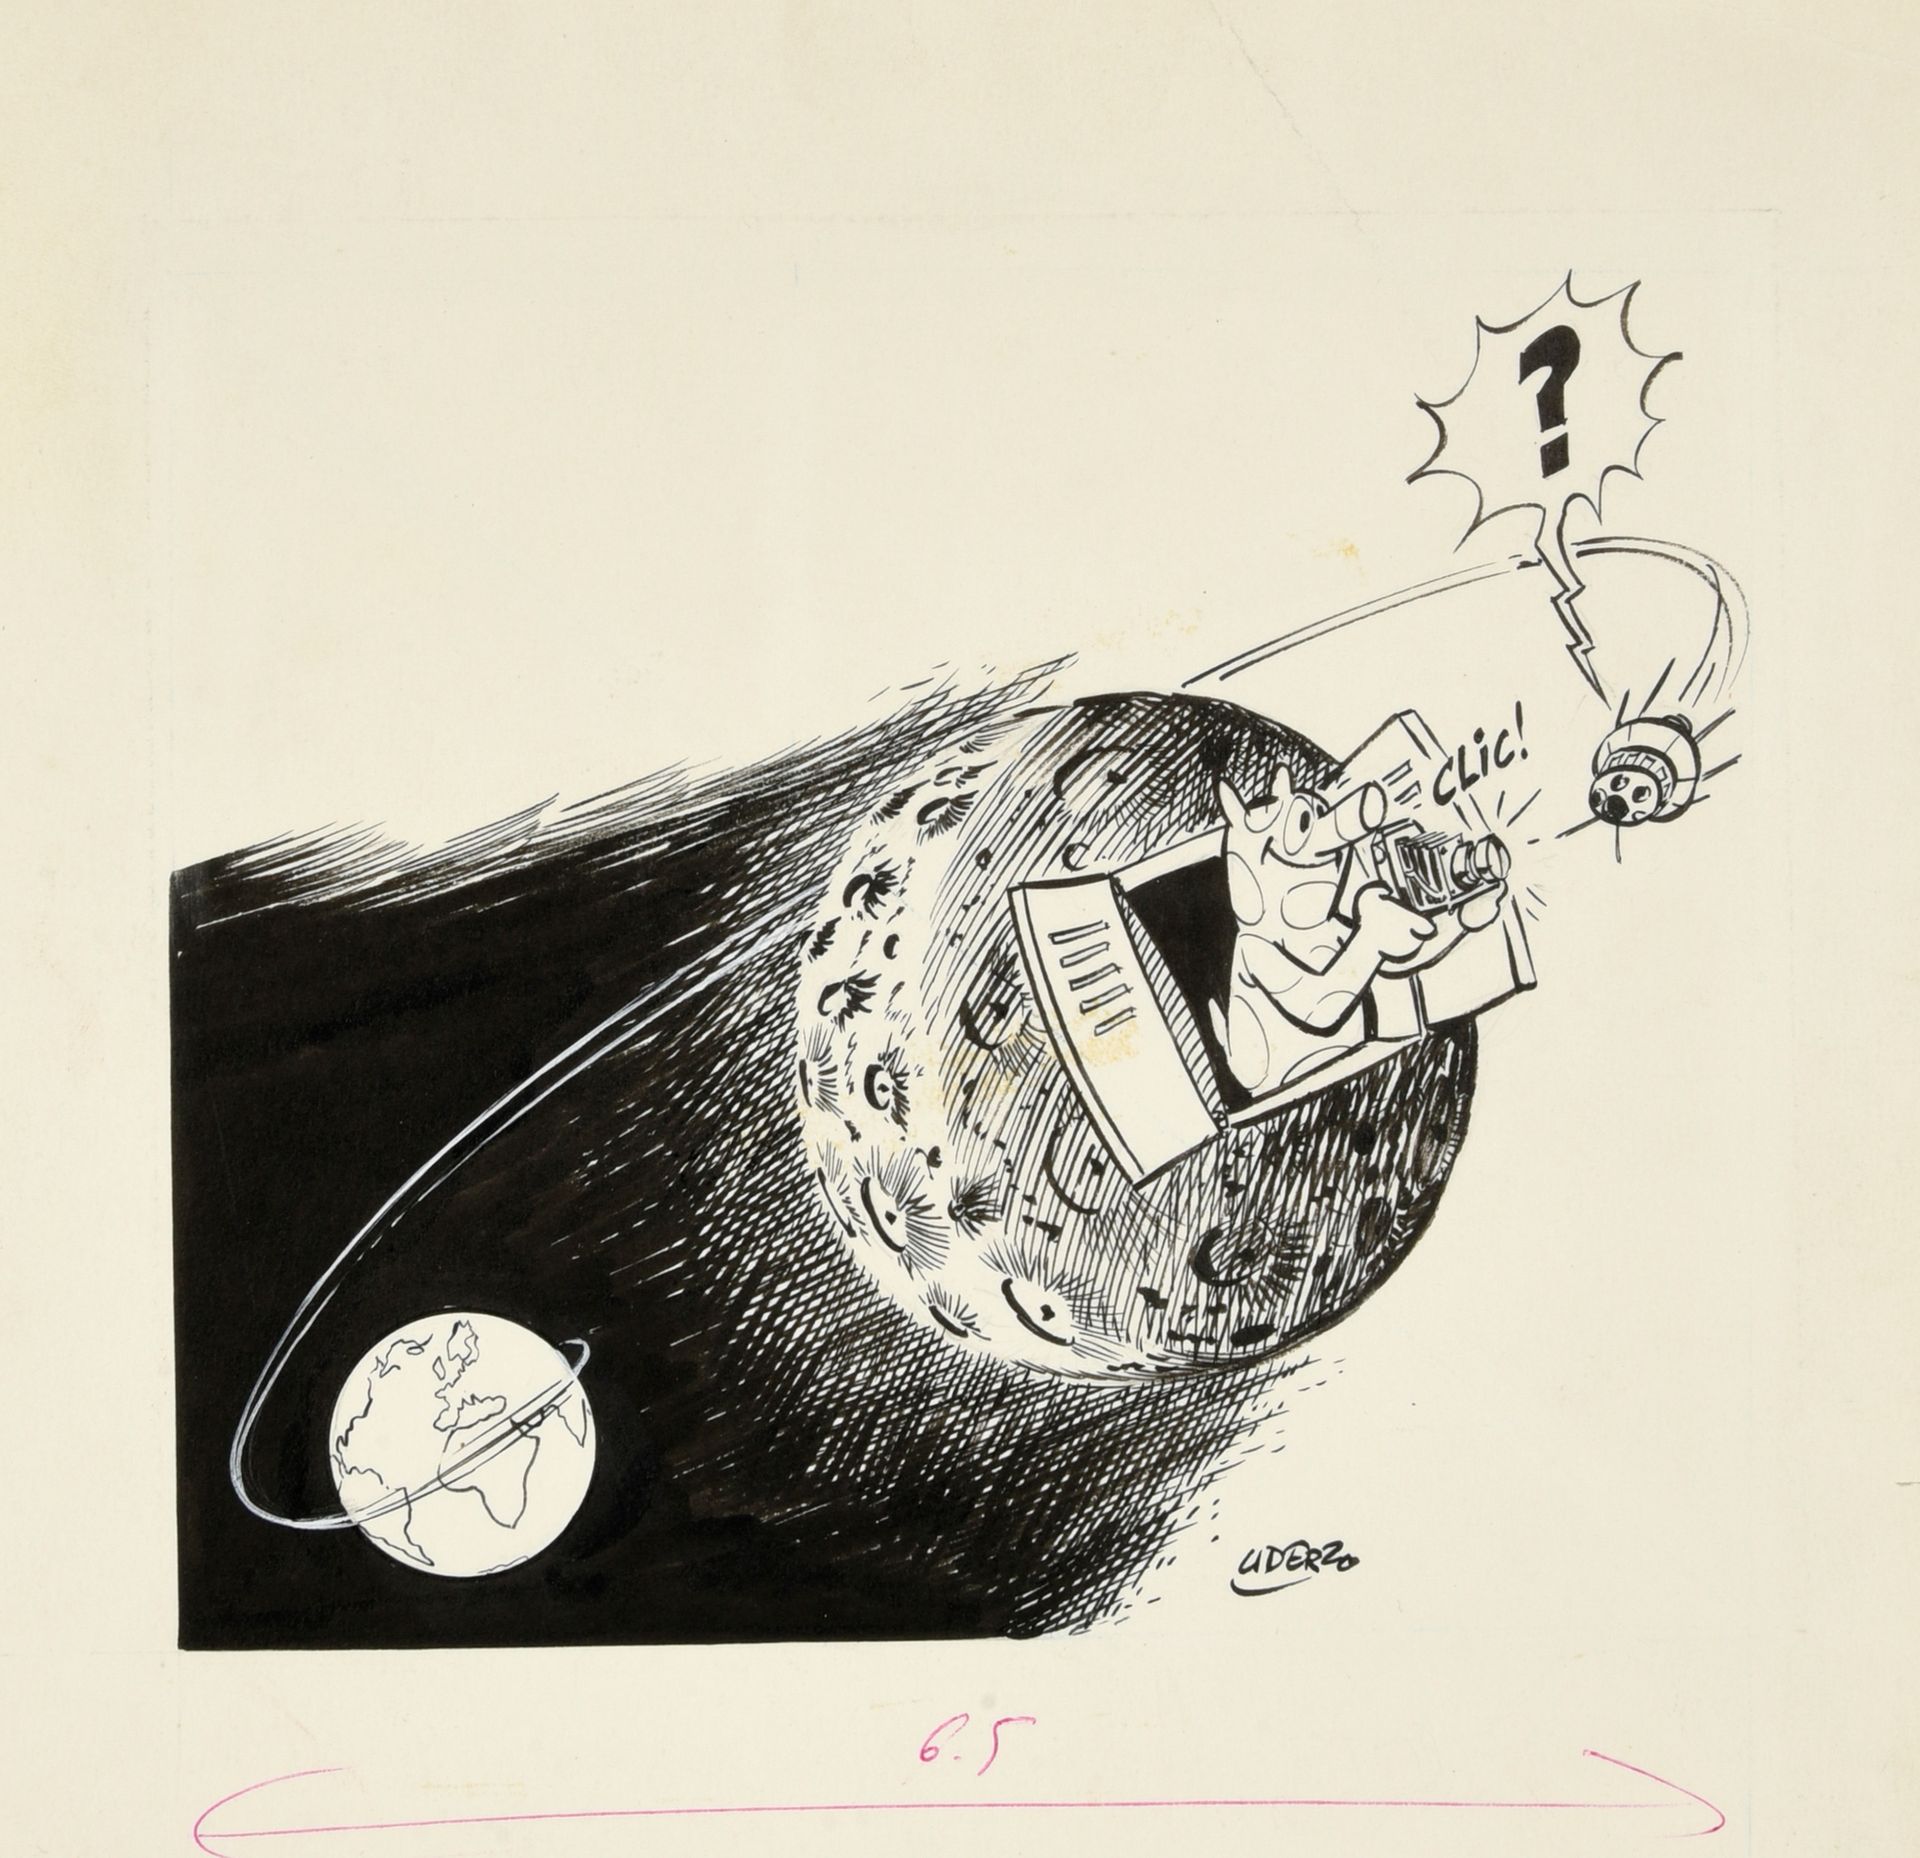 UDERZO, Albert (1927-2020) 太空中的小猪摄影师。
印度墨水制作的幽默插图，可能是为了在60年代初为Pilote报的版面制作动画。
尺寸&hellip;